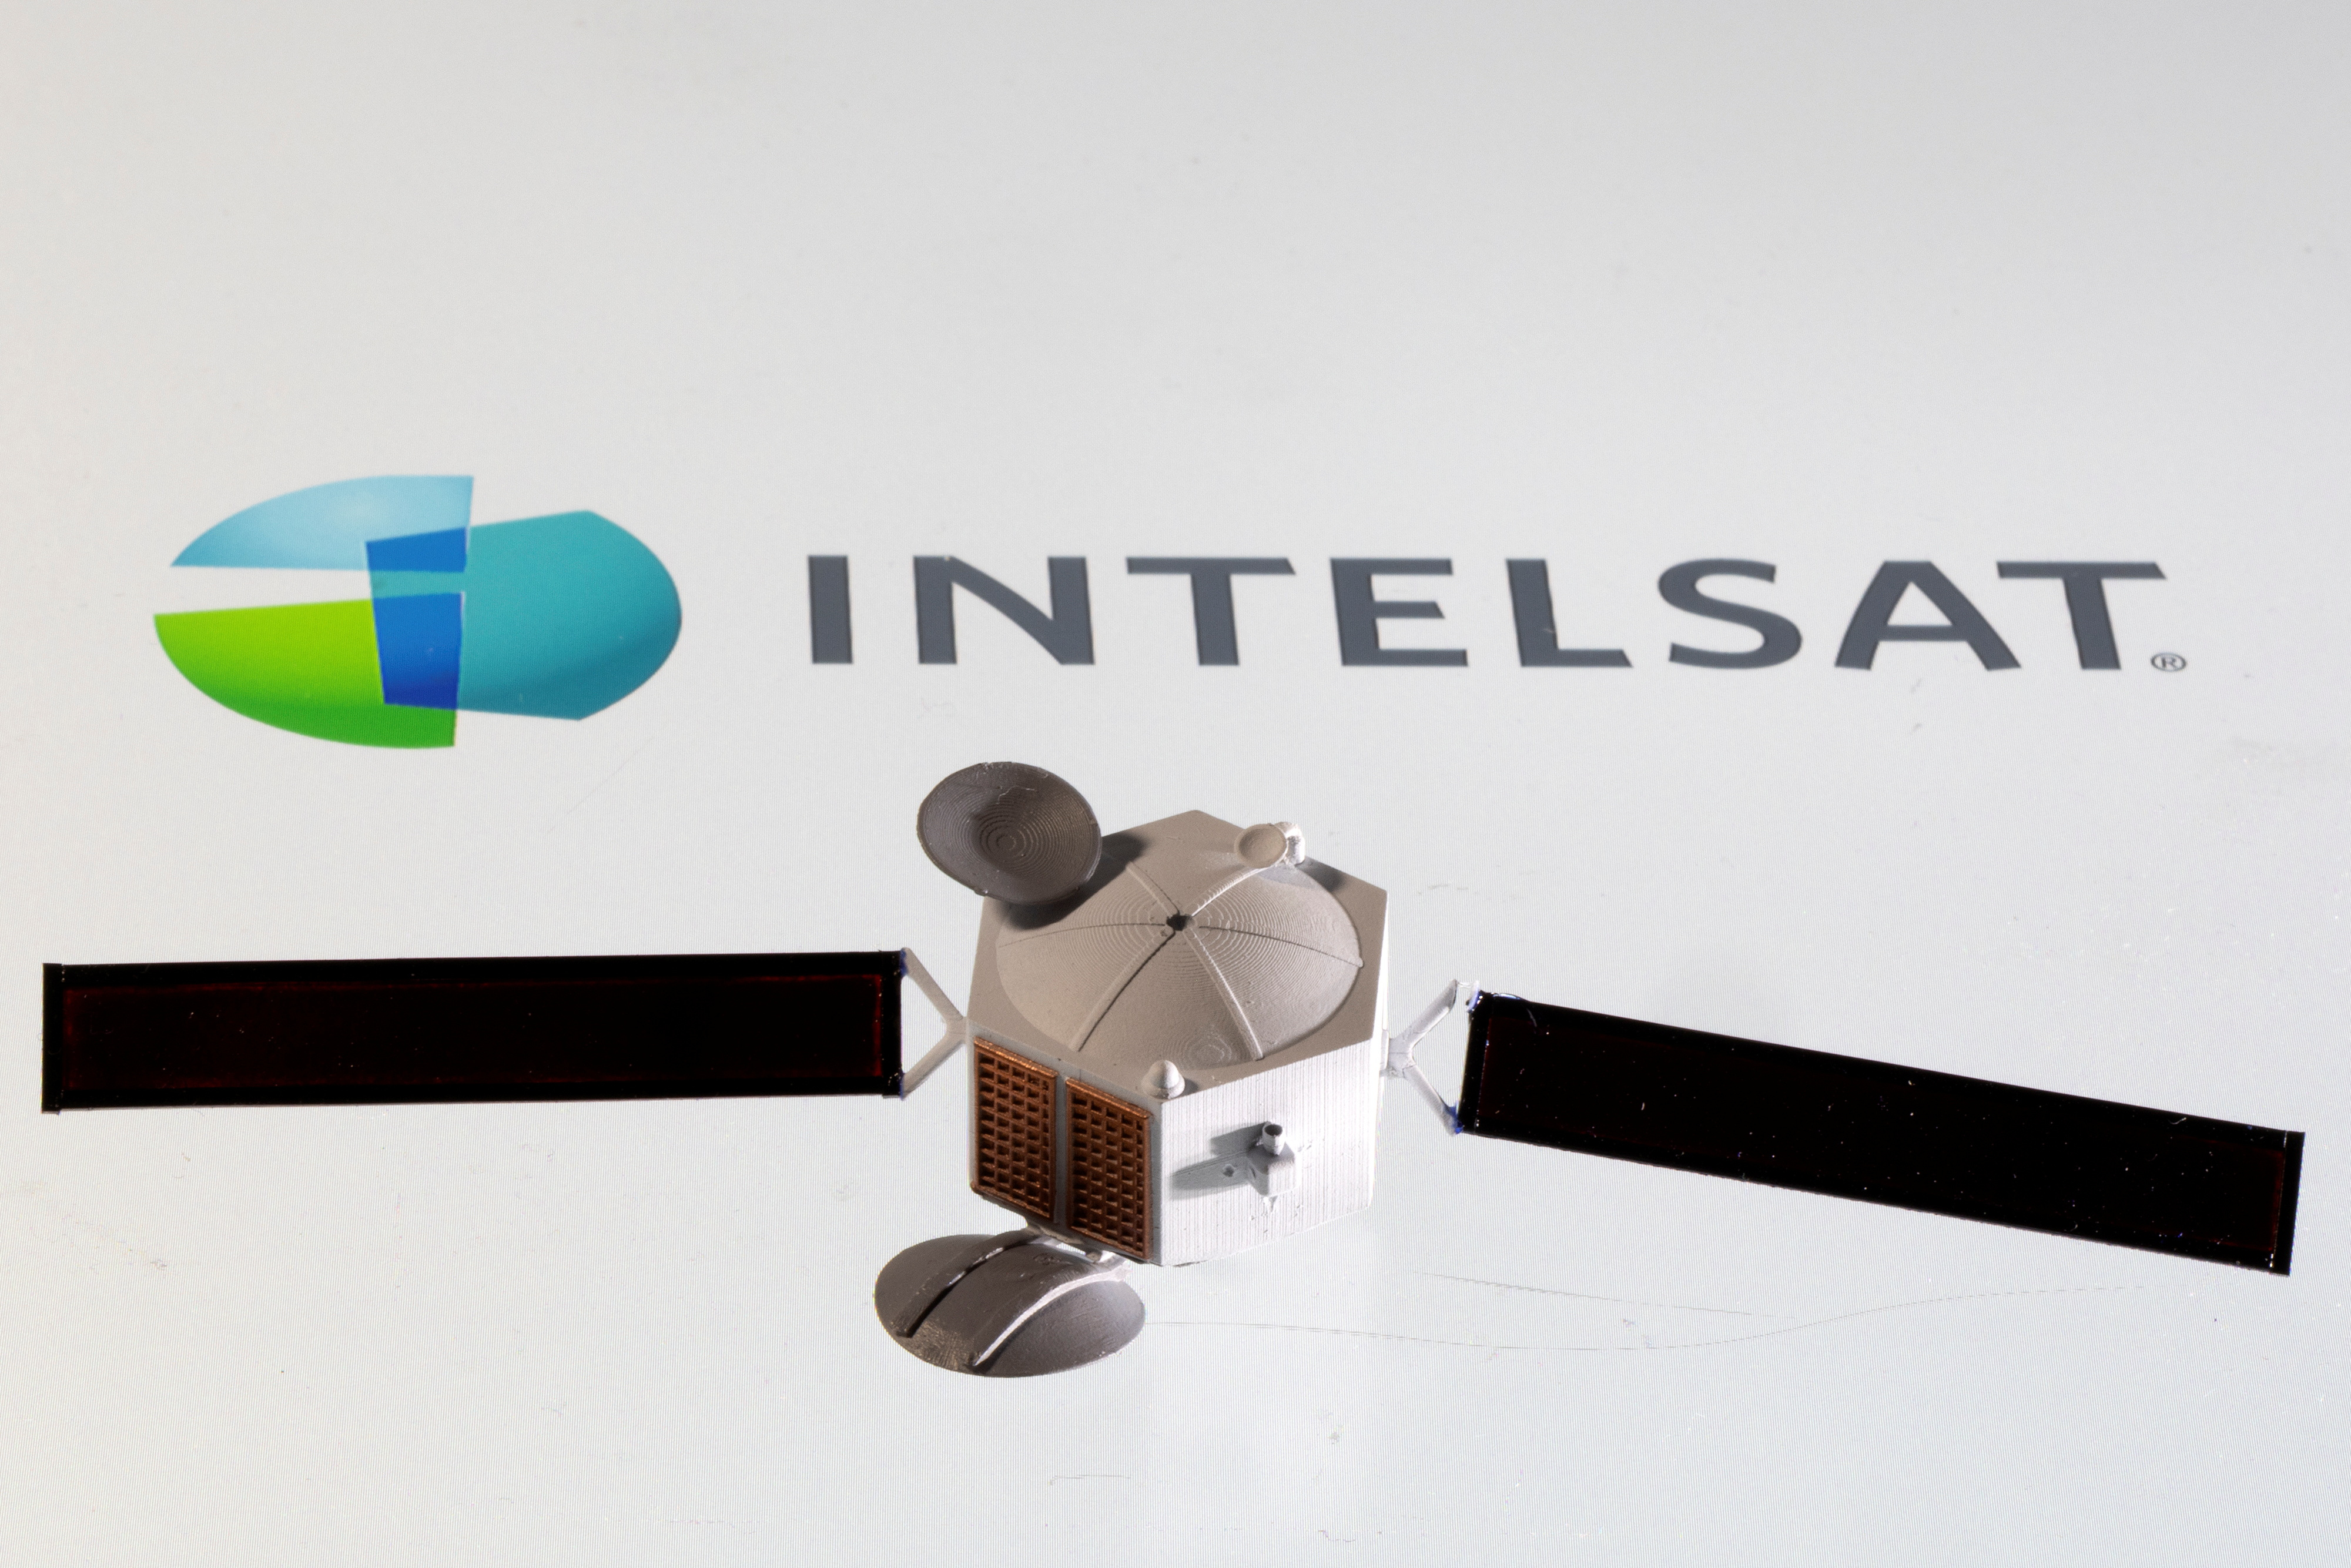 Picture illustration of Intelsat logo and satellite model